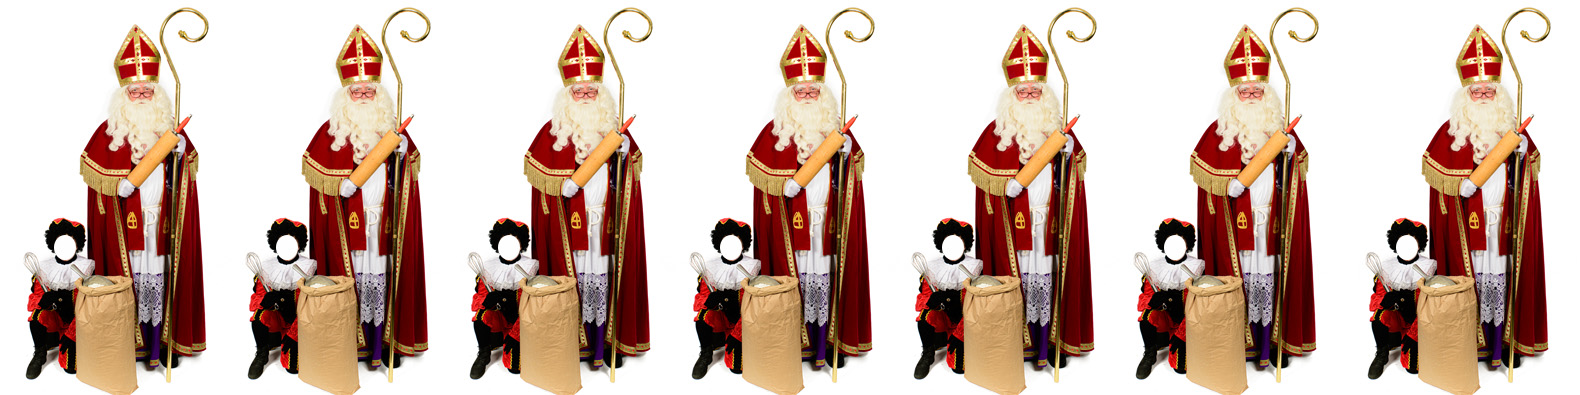 Sinterklaas_1580x395.jpg